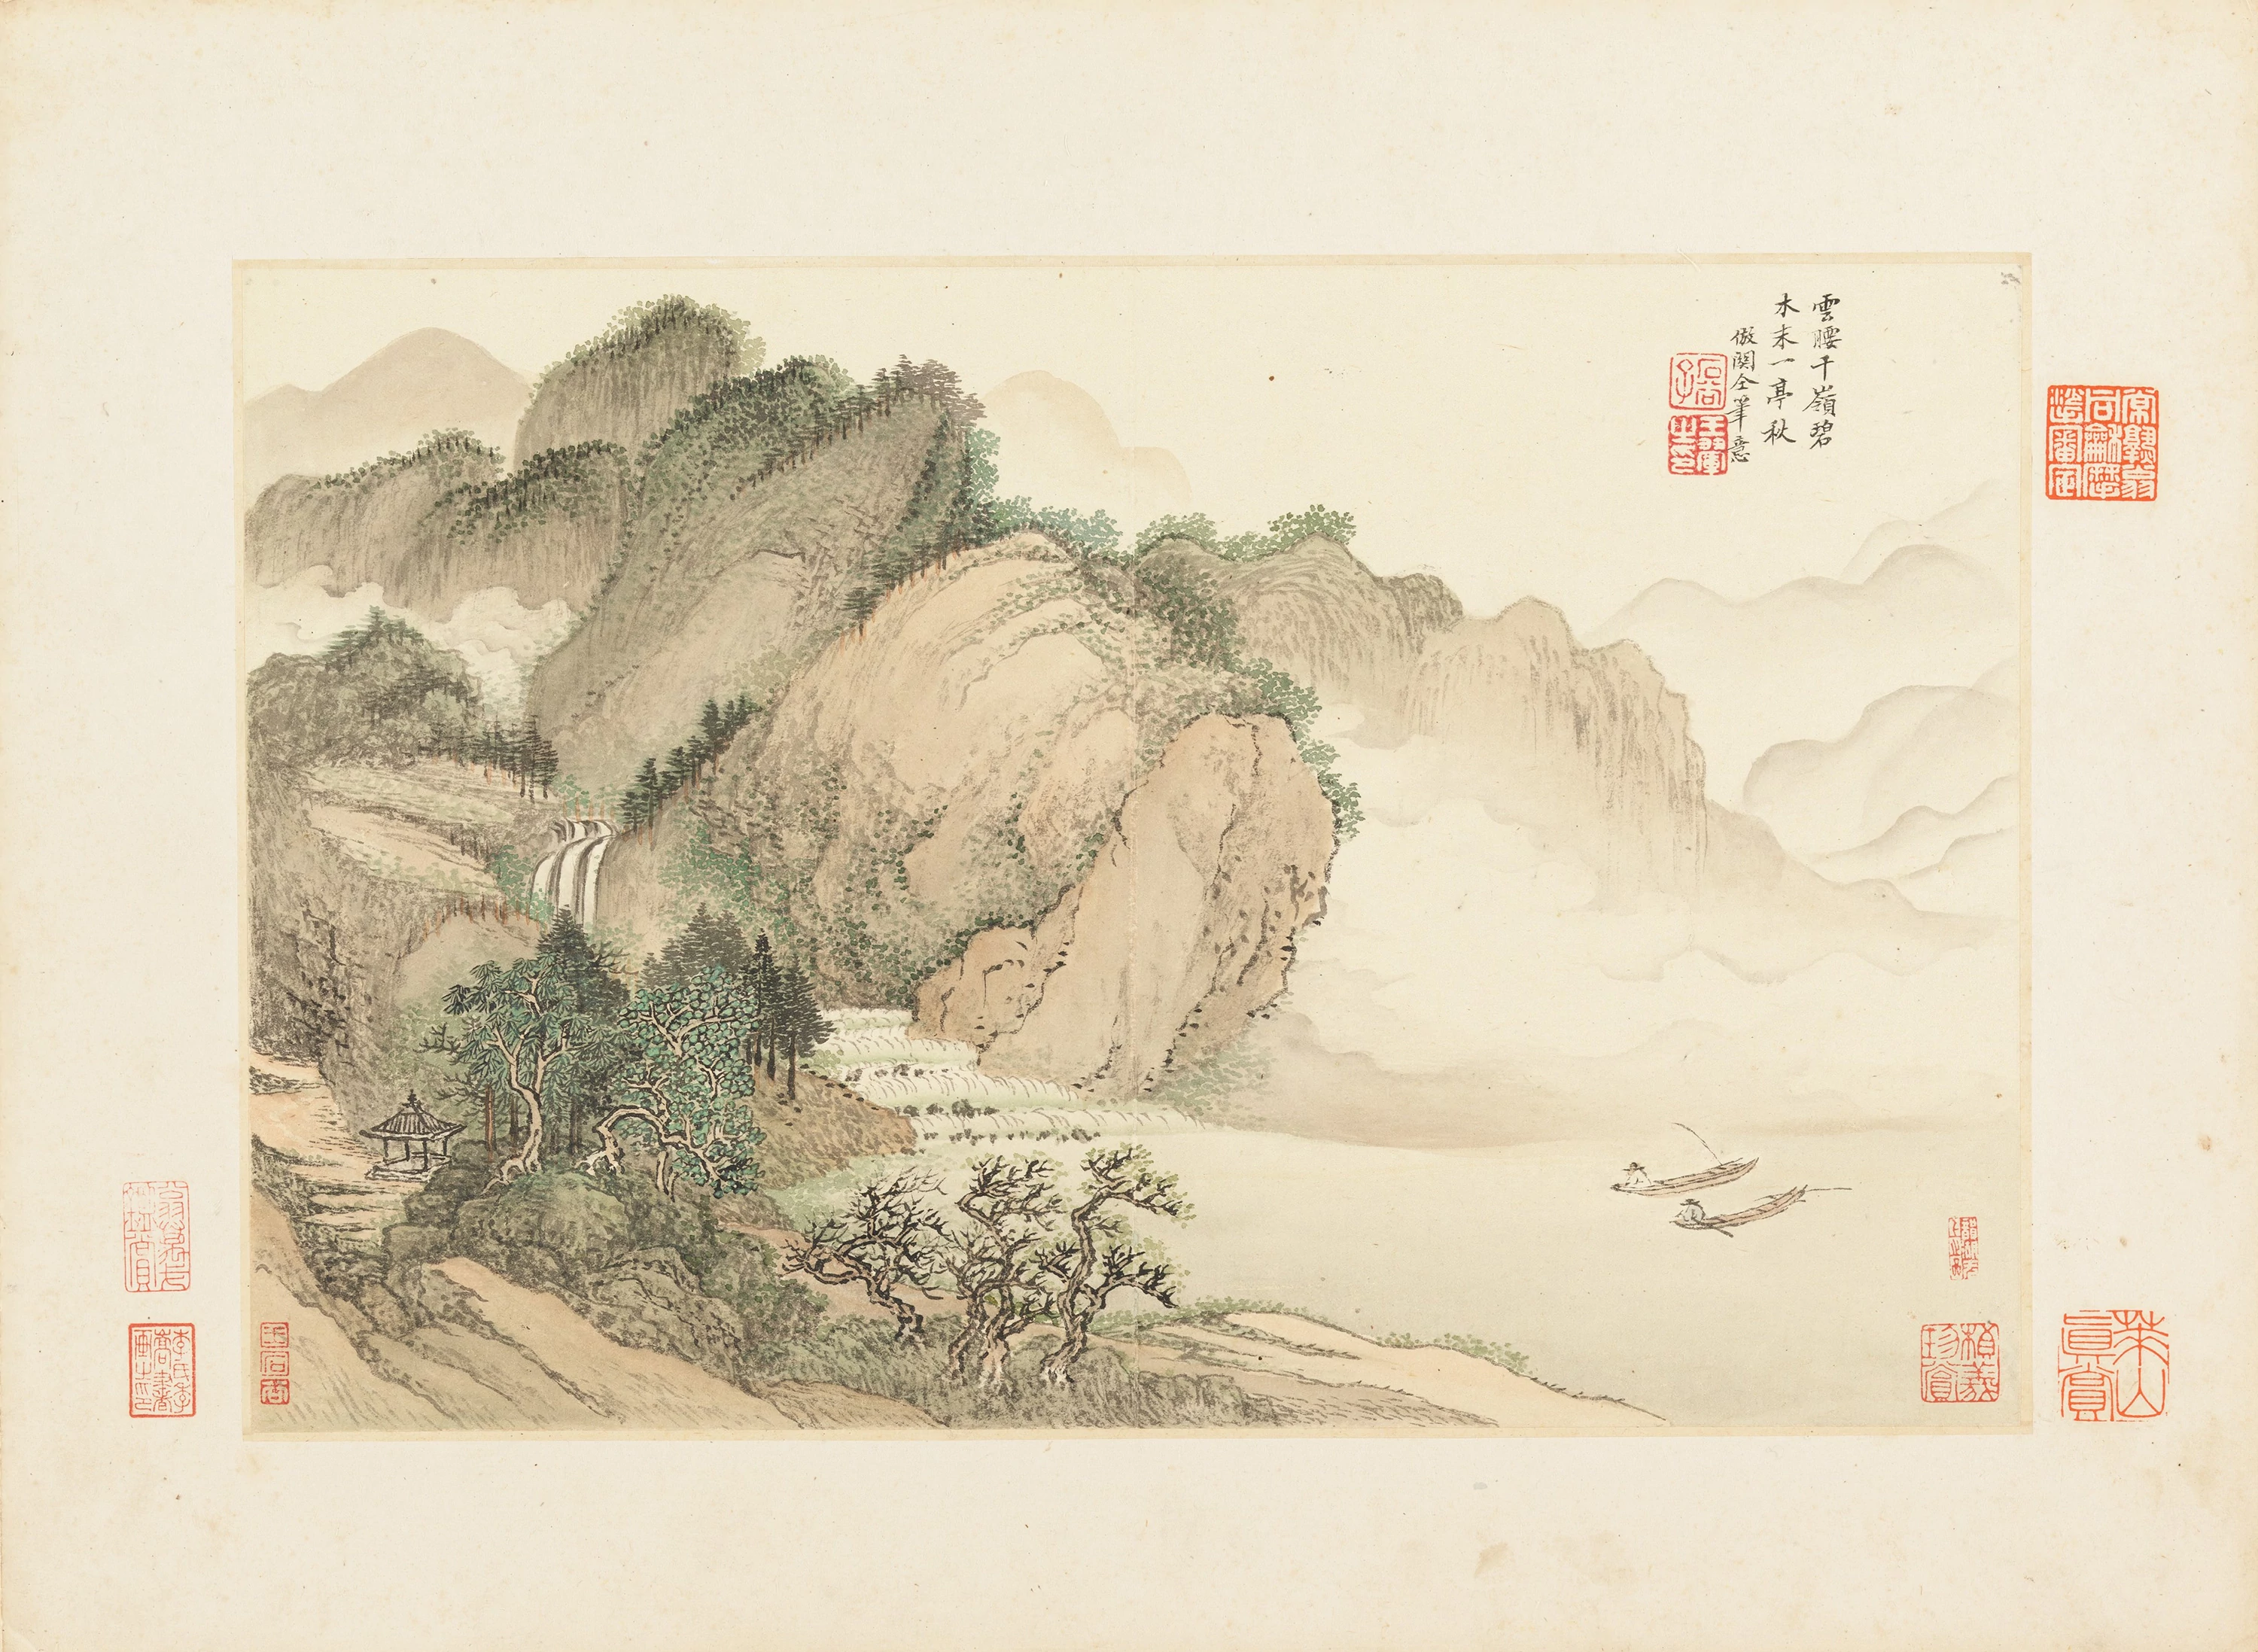 Landscapes 4, 仿古山水圖, Wang Hui (王翚)